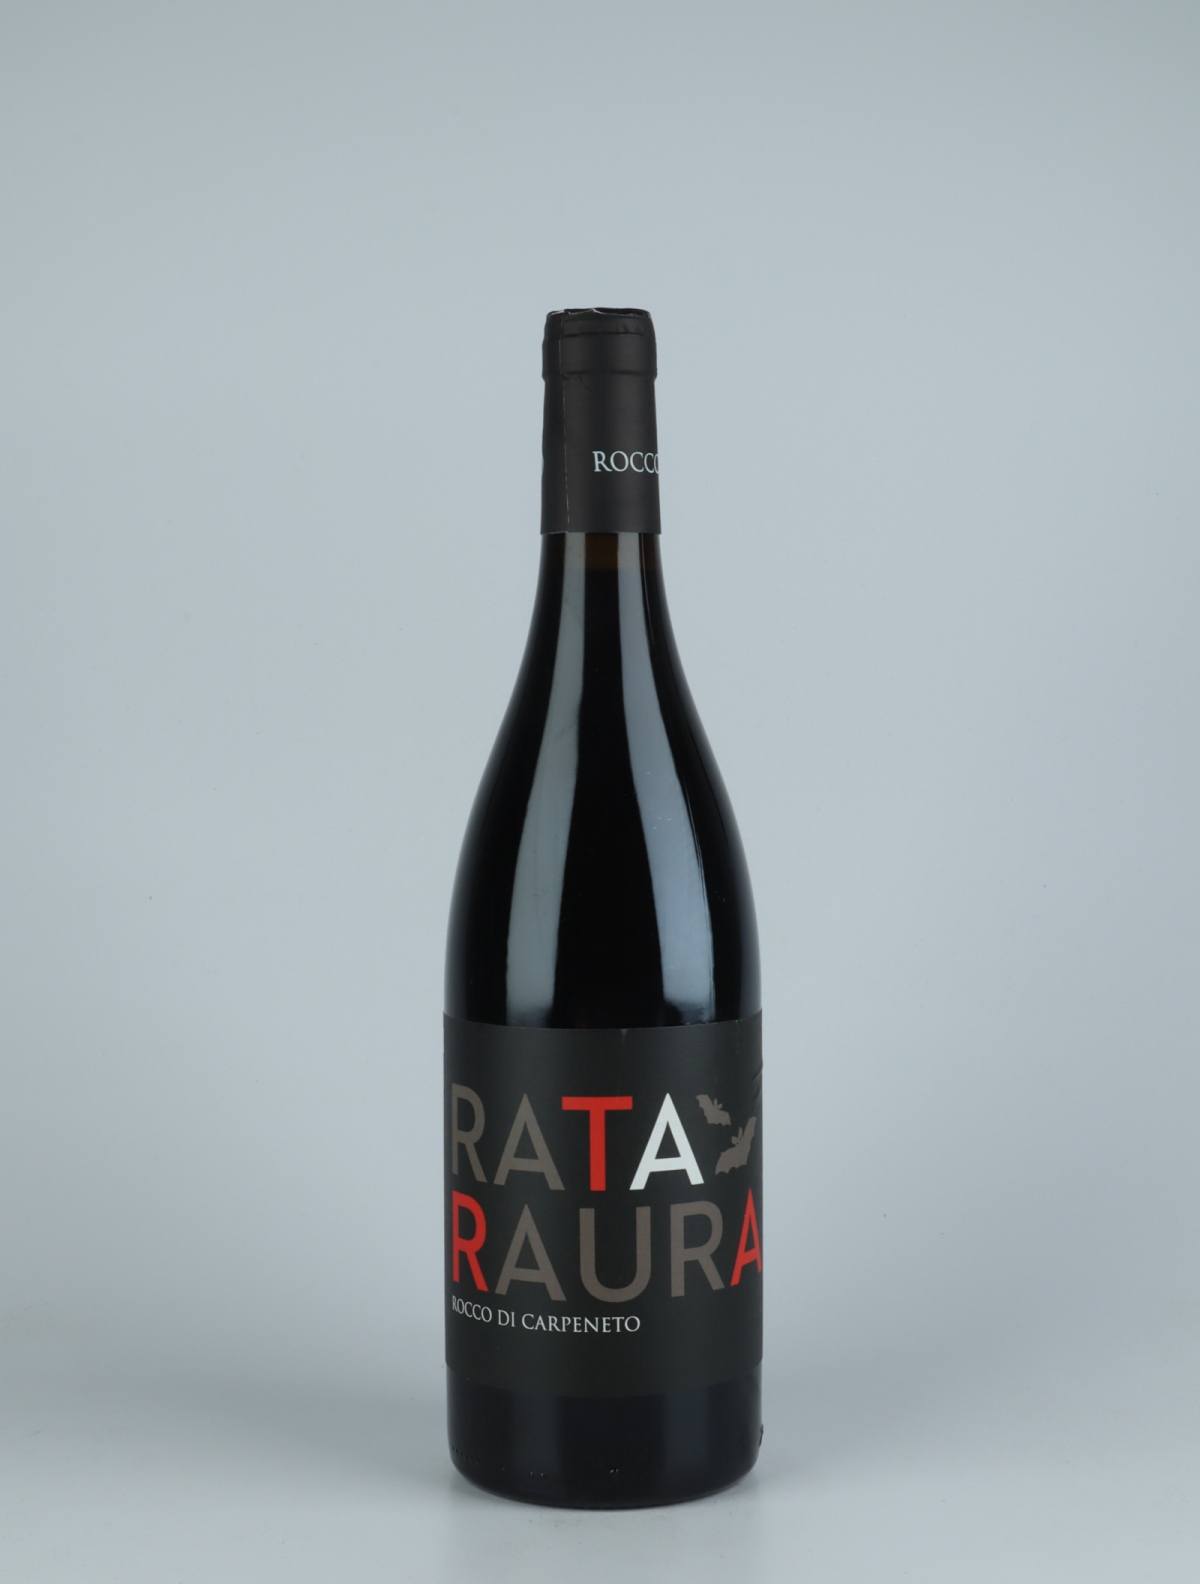 En flaske 2019 Rataraura Rødvin fra Rocco di Carpeneto, Piemonte i Italien